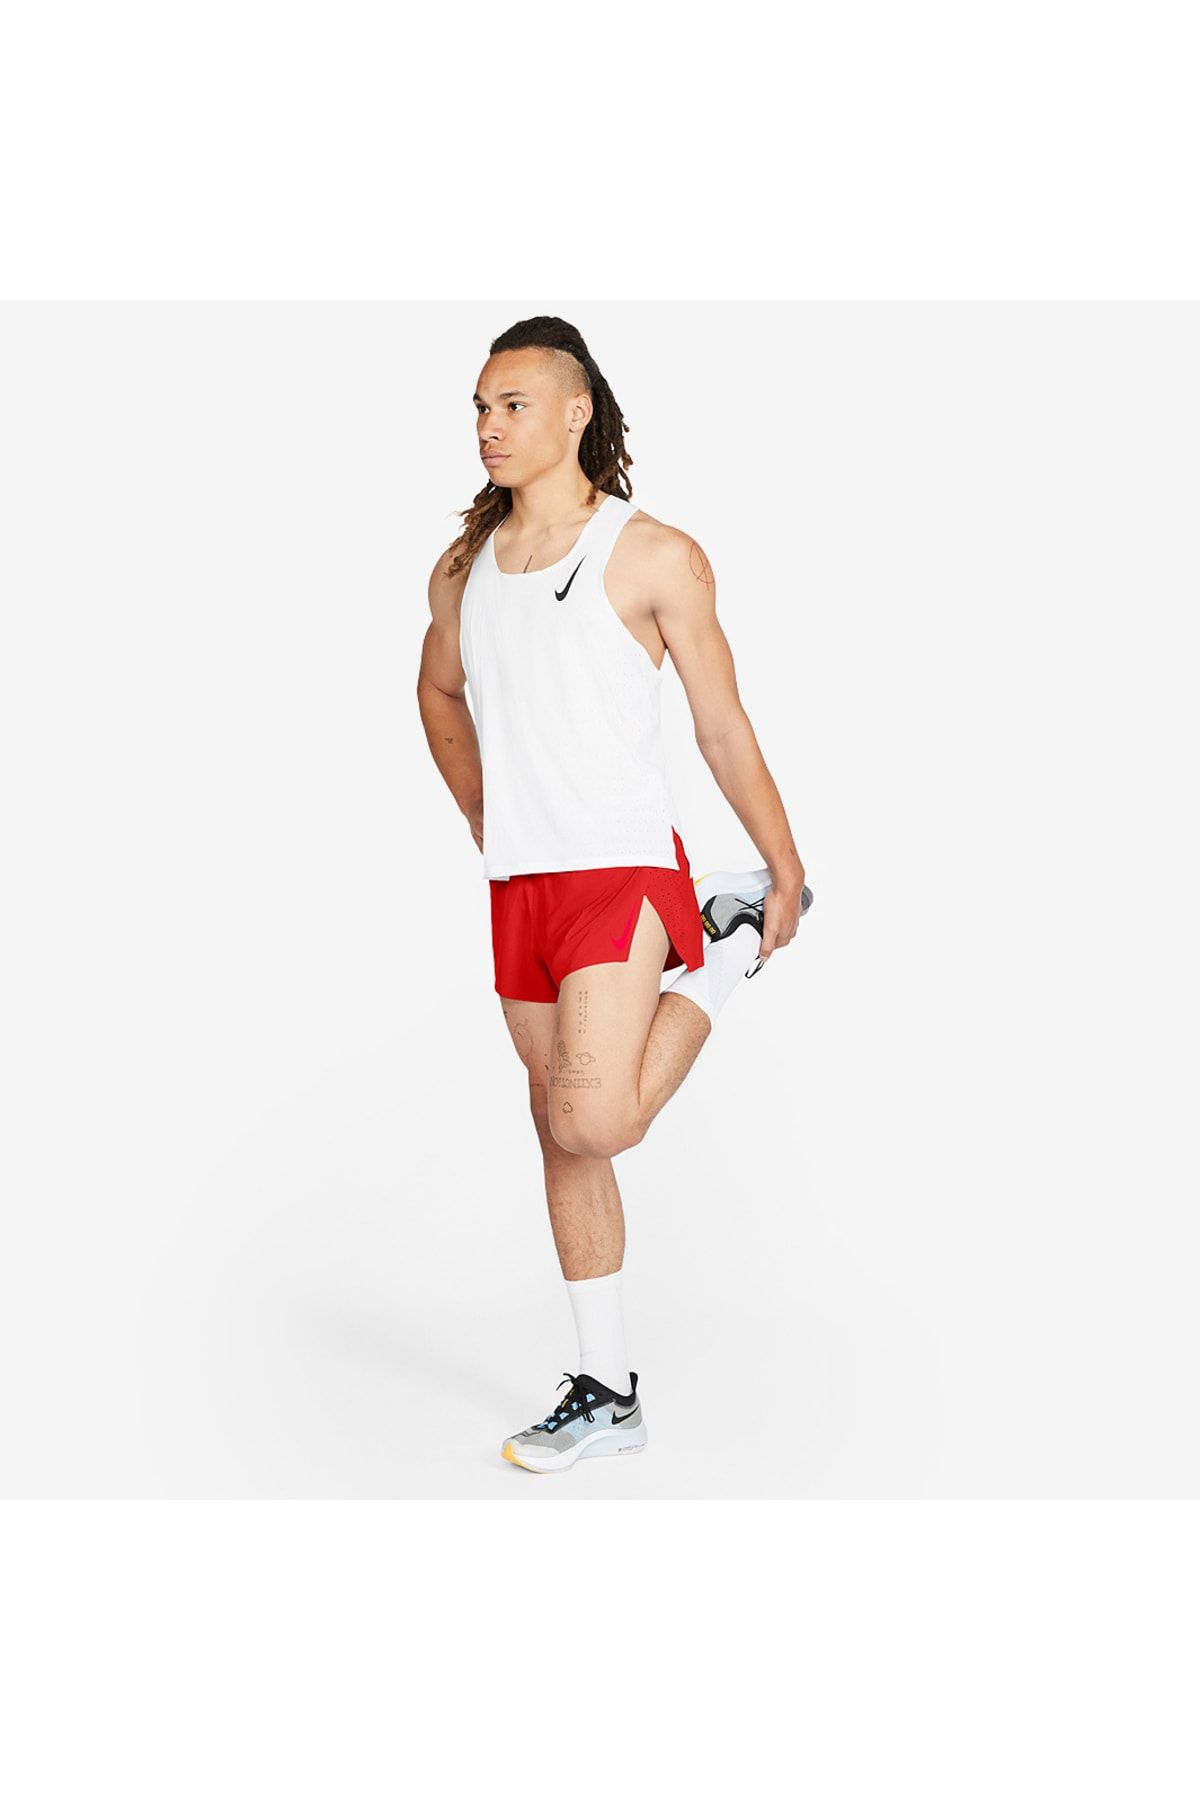 Nike AeroSwift Men's 2 Running Shorts CJ7837-010 (Black/White